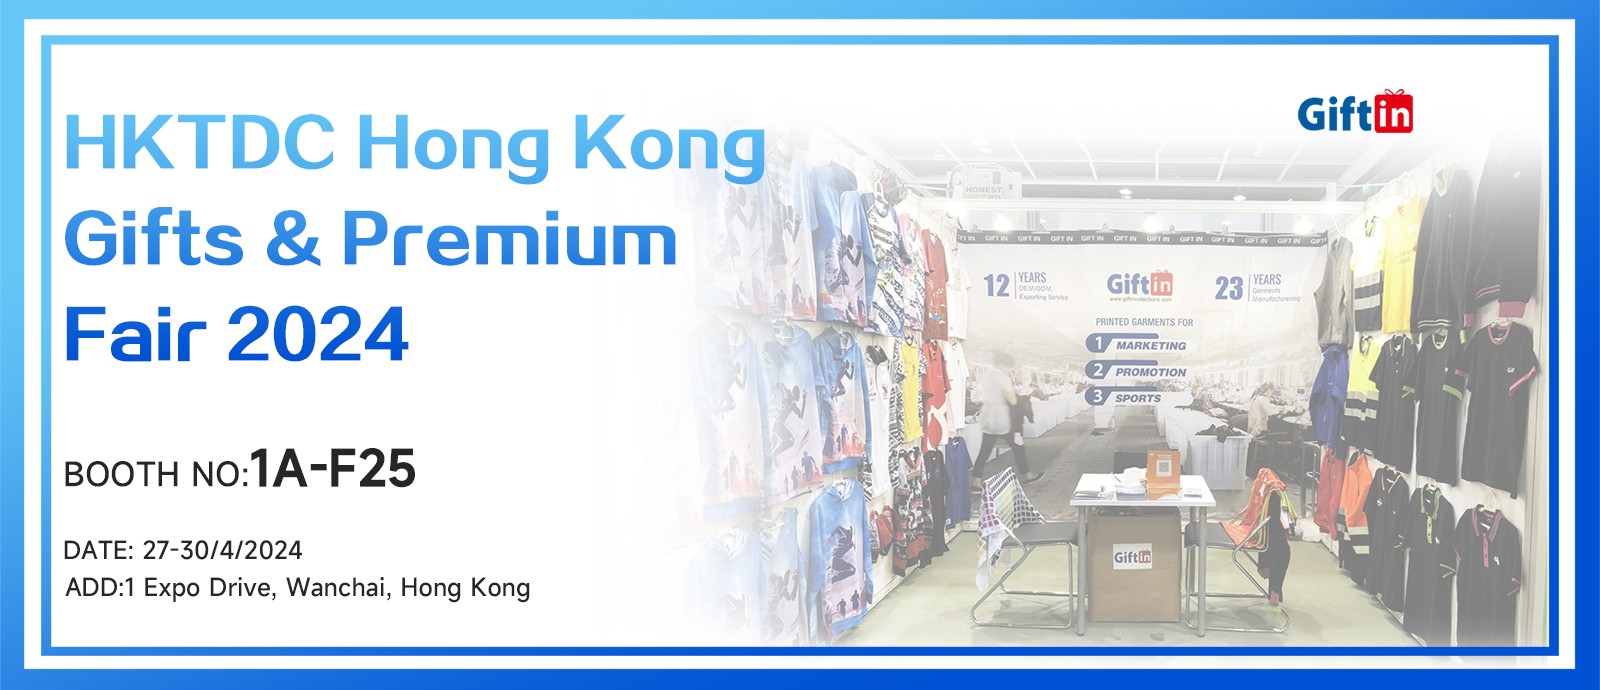 Feria de regalos y premium de Hong Kong HKDTC 2024